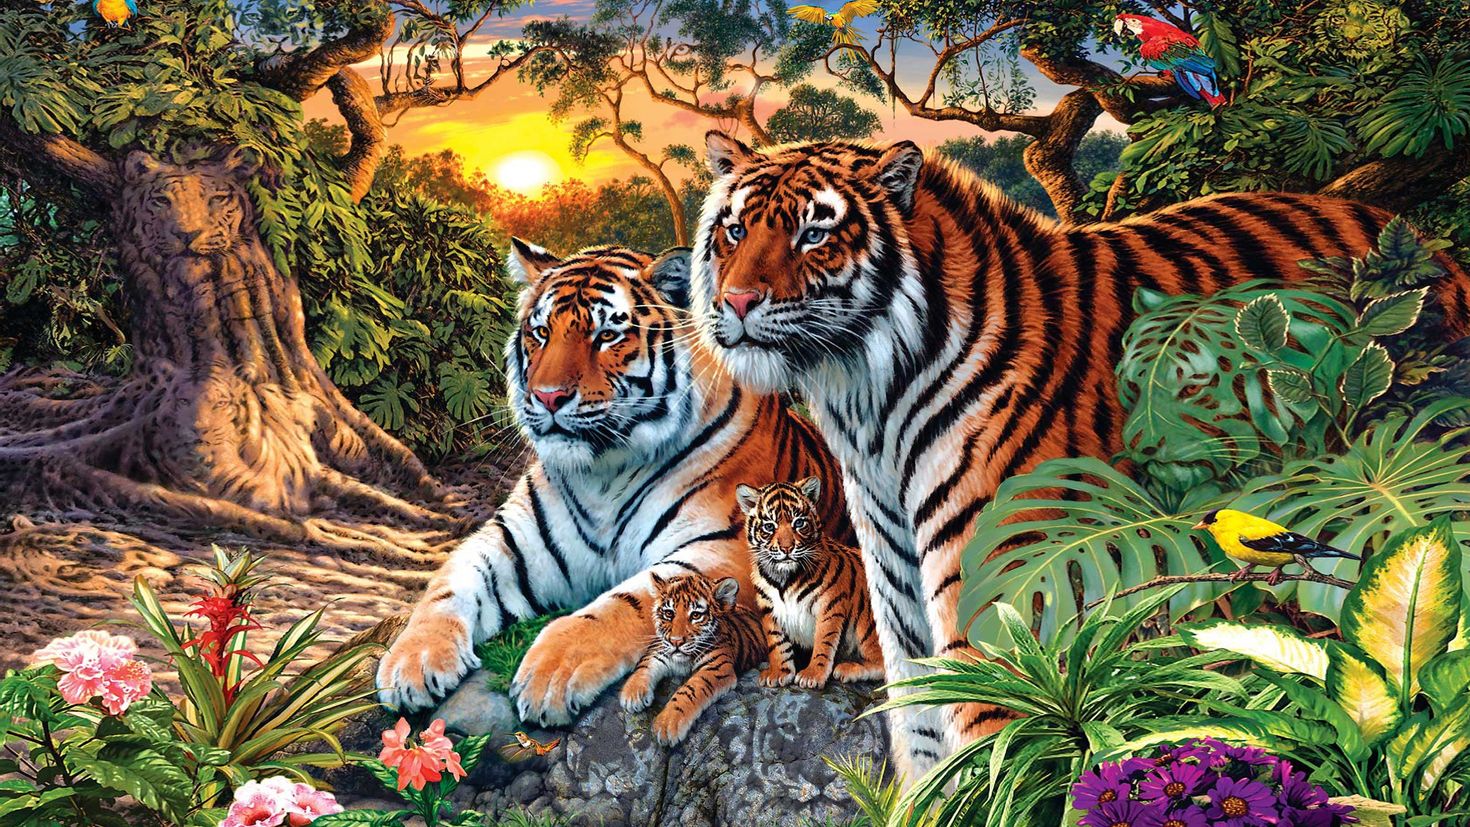 Сколько тигров на картинке